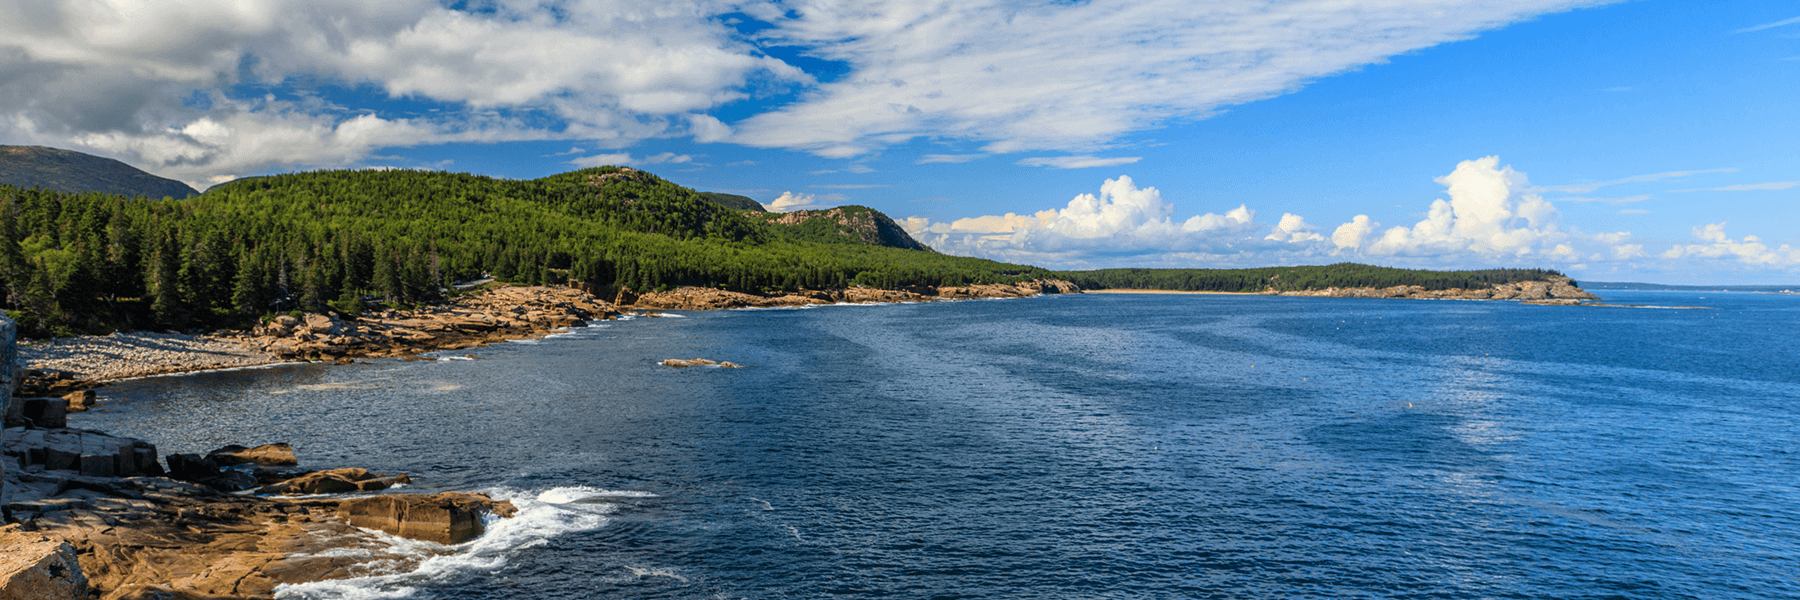 The Maine coast at Acadia National Park. Credit: NPS